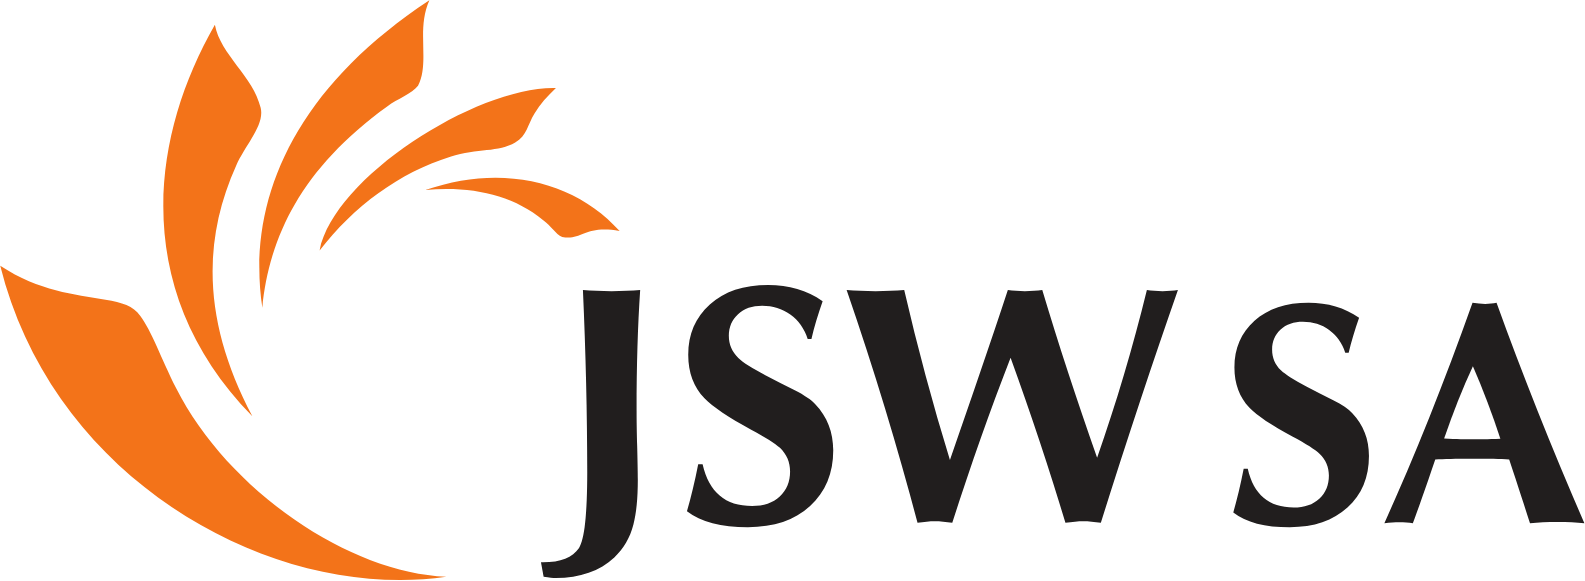 File:WTSL & WTSV former logo.png - Wikipedia